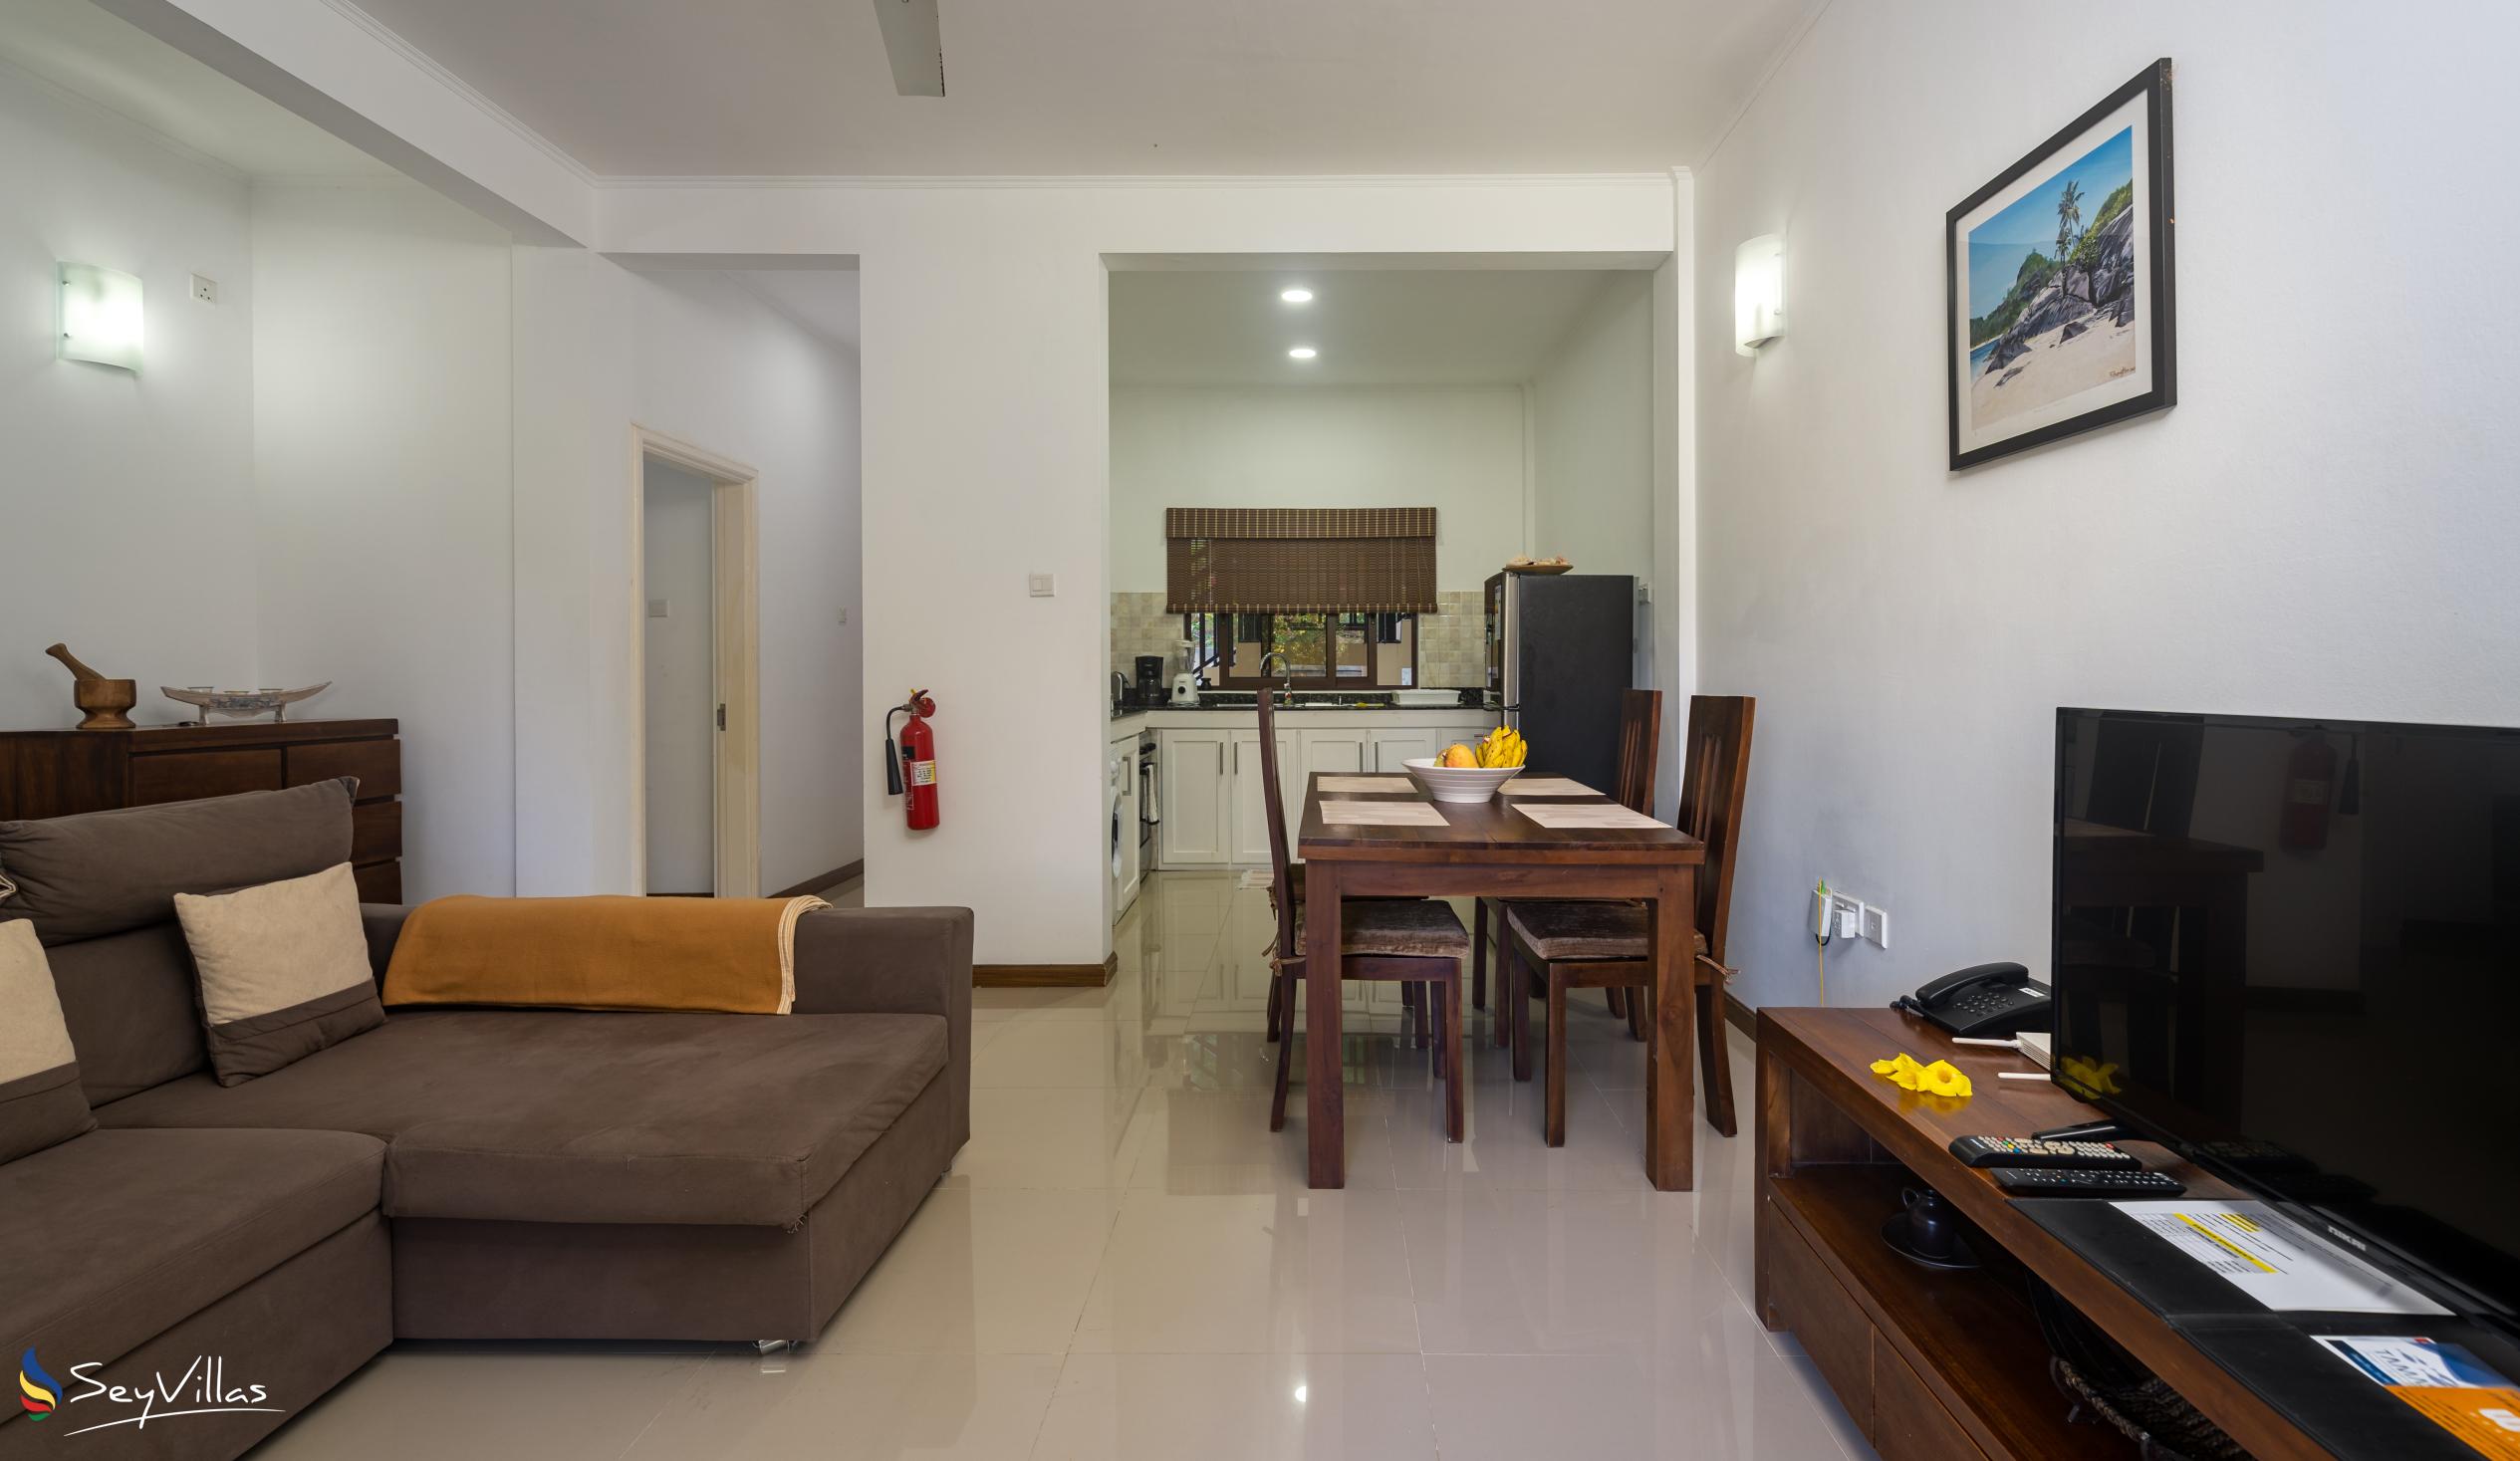 Foto 22: Kanasuk Self Catering Apartments - Appartamento Cinnamon con 2 camere - Mahé (Seychelles)